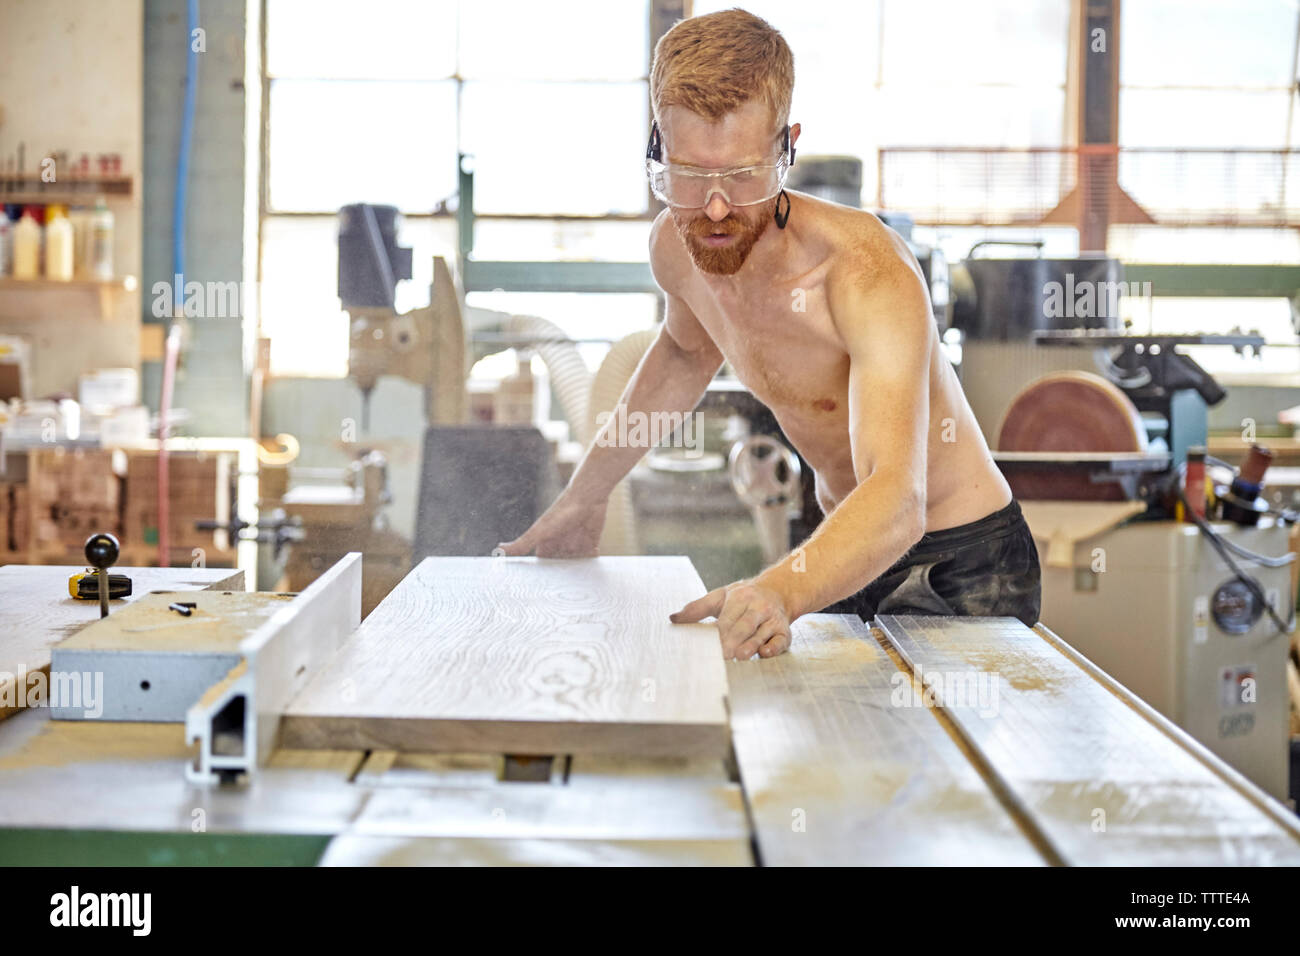 Shirtless carpenter working in workshop Stock Photo - Alamy